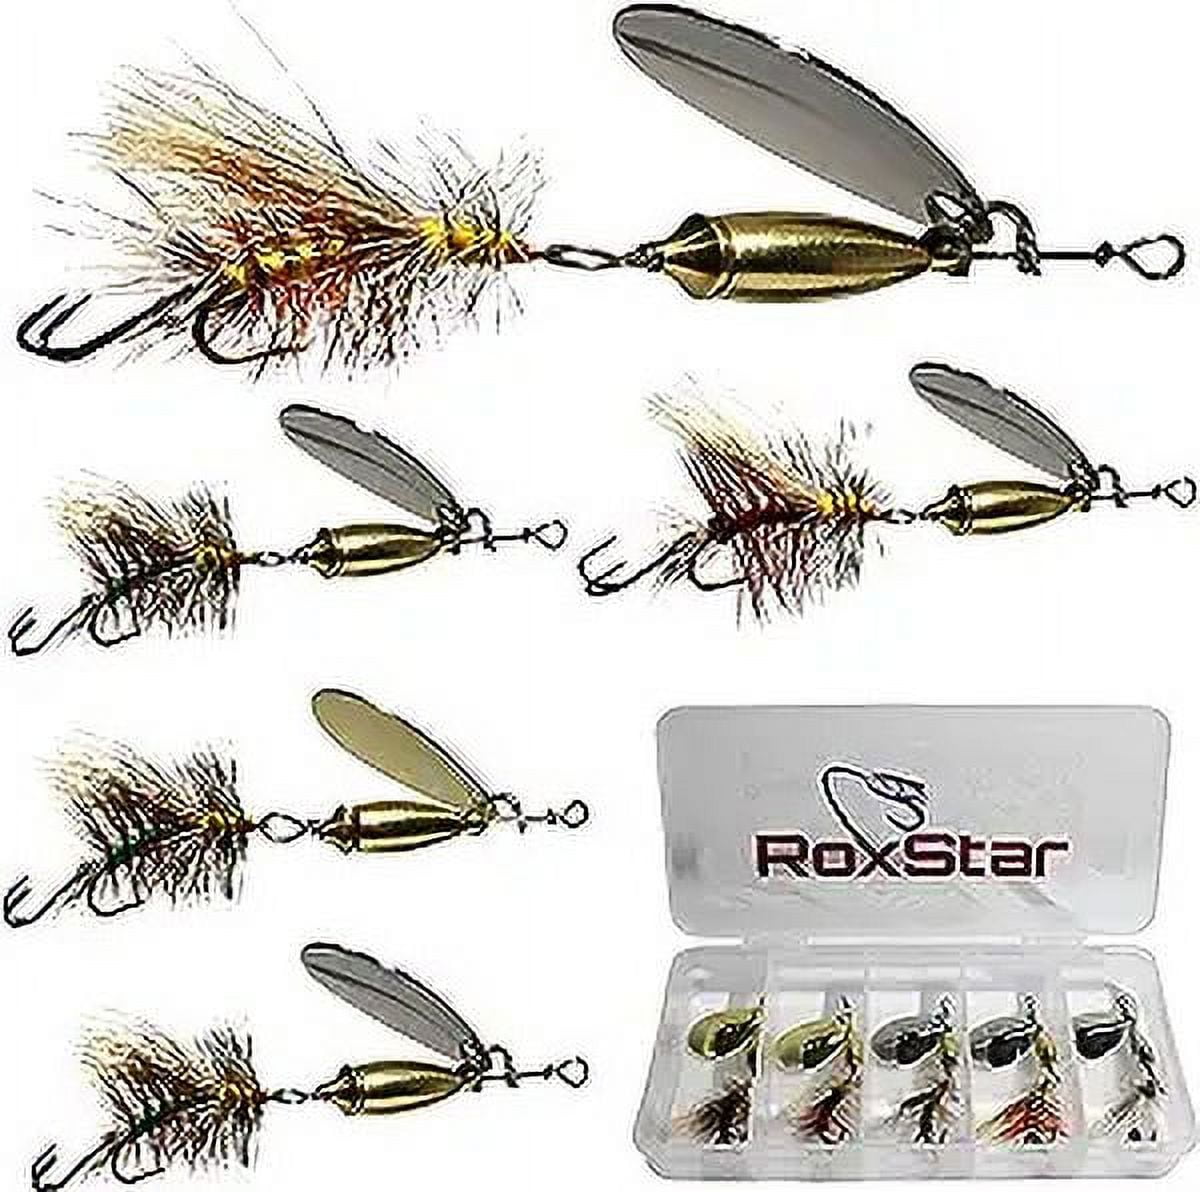 RoxStar Fishing Fly Strikers, 100% USA Handmade